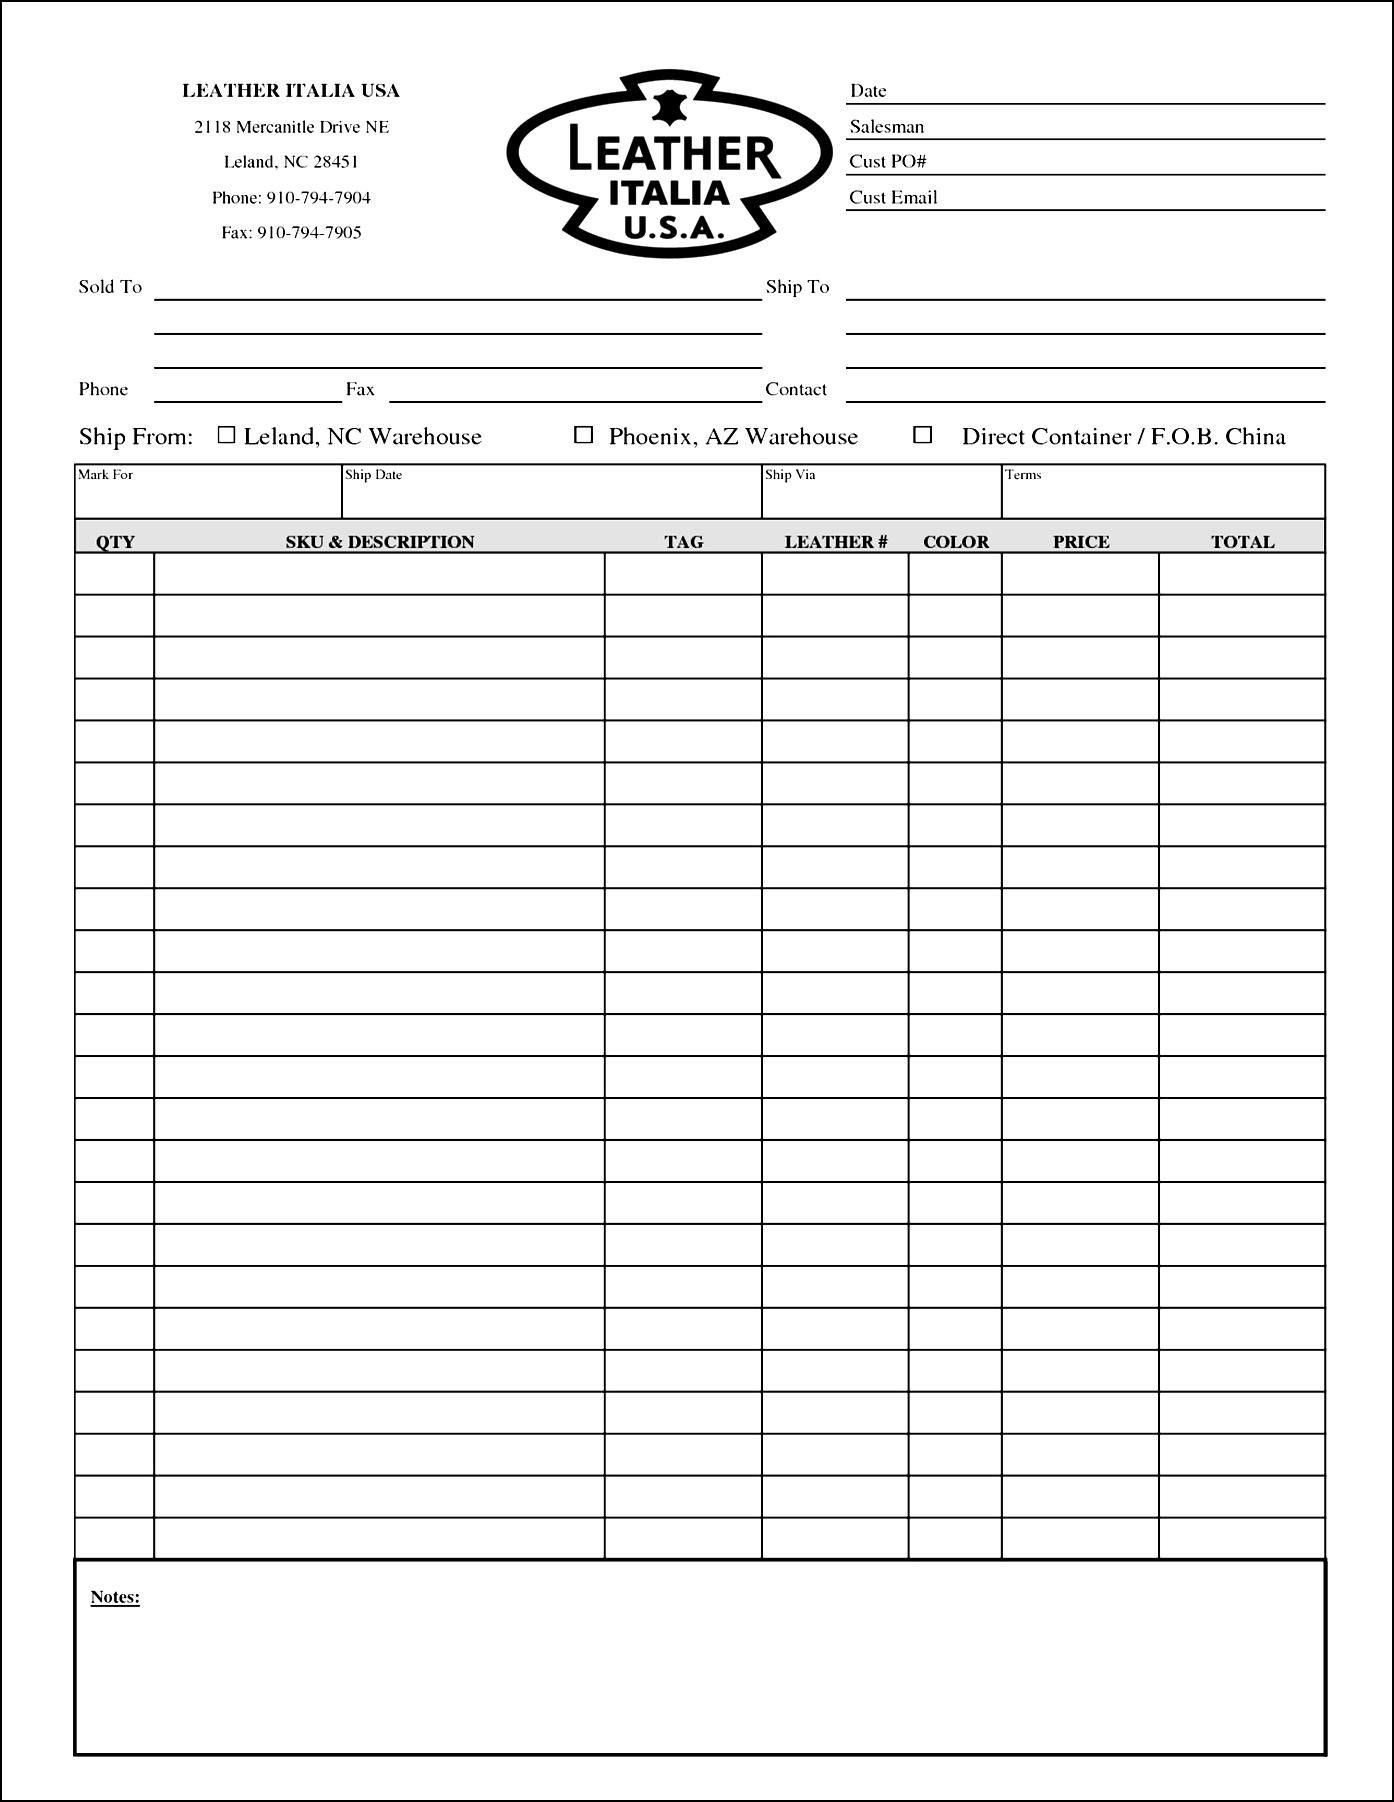 Order Form Sample Excel 2 Order Form Sample Excel That Had Gone Way Too Far AH STUDIO Blog